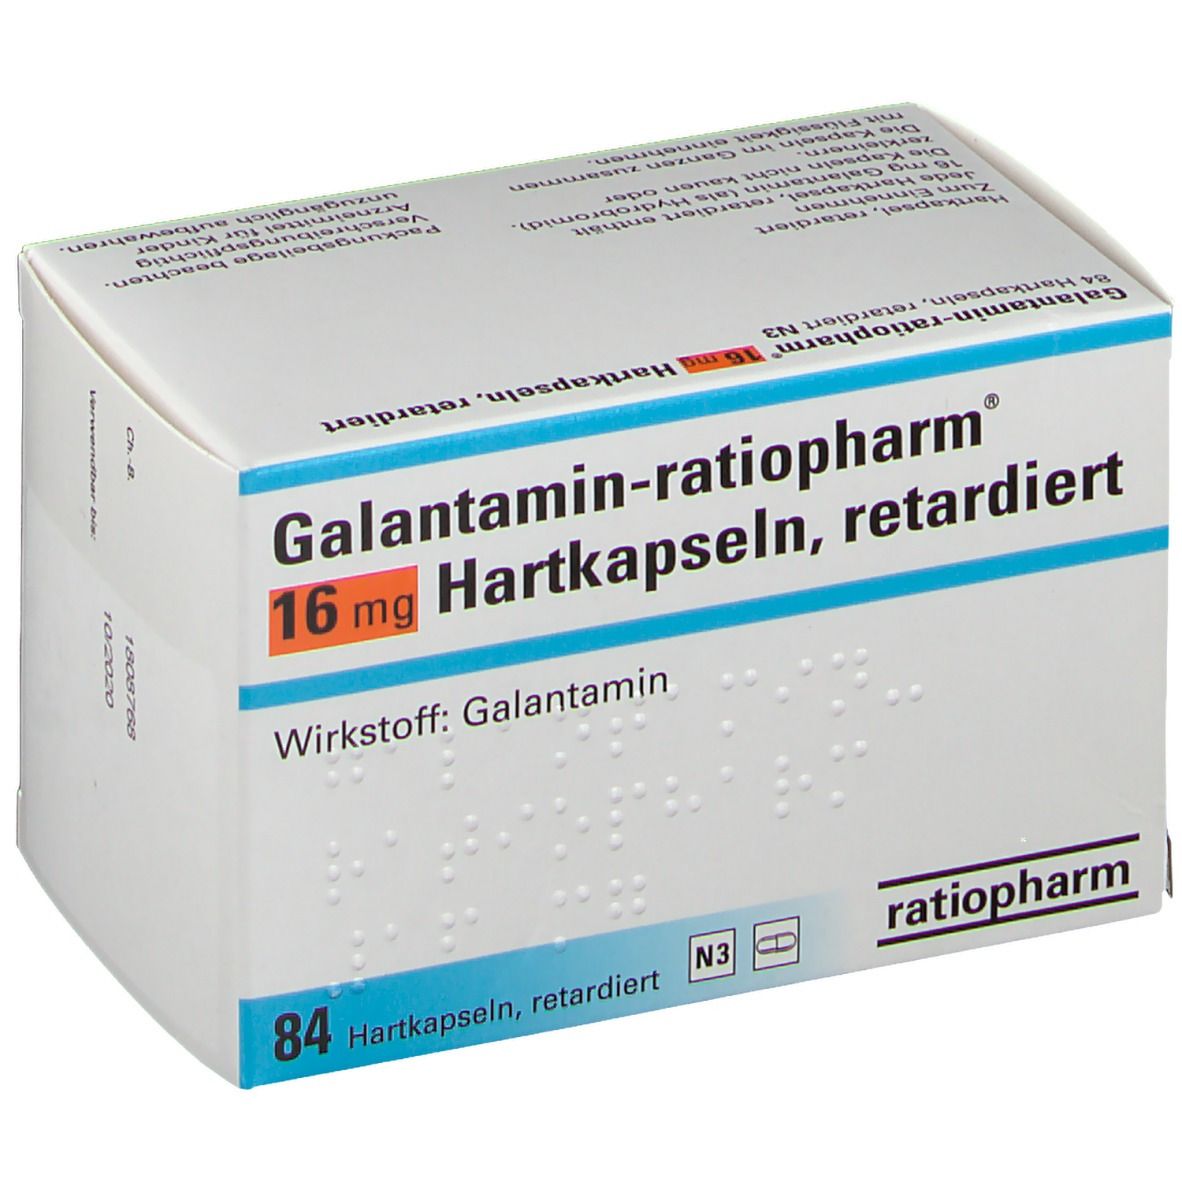 Galantamin-ratiopharm® 16 mg